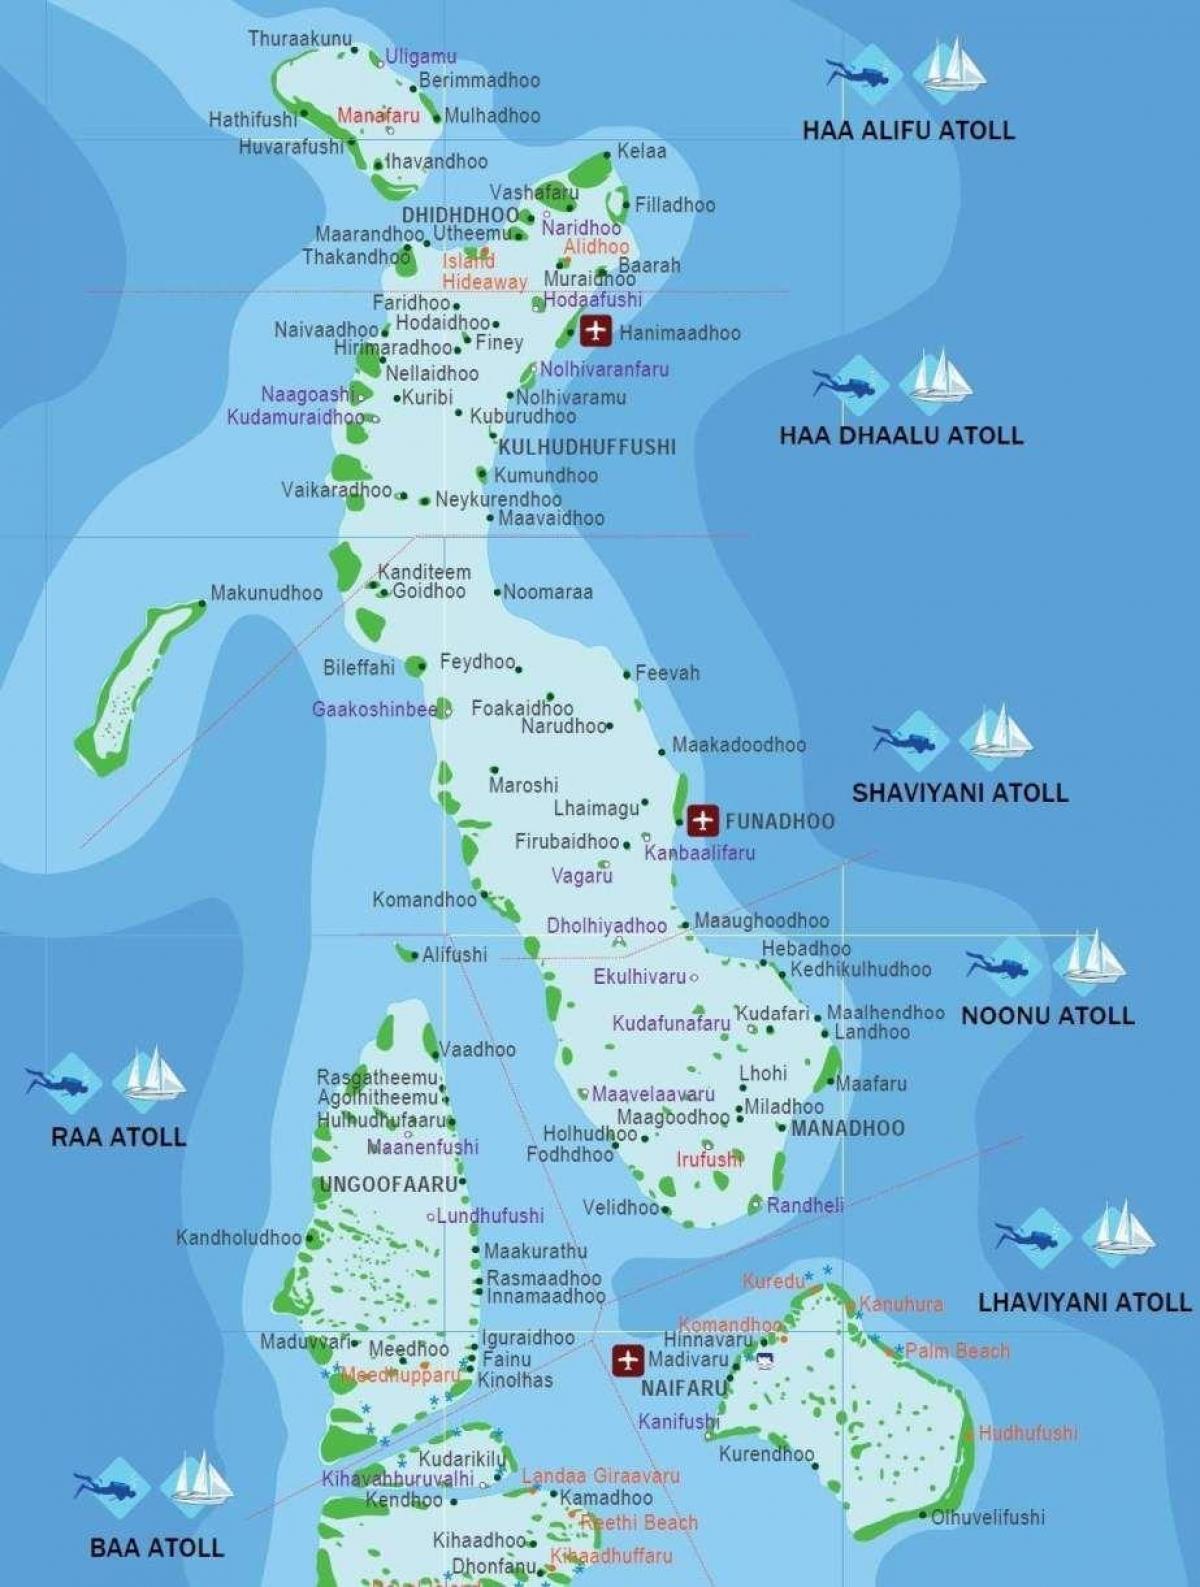 iles مالدیپ کا نقشہ